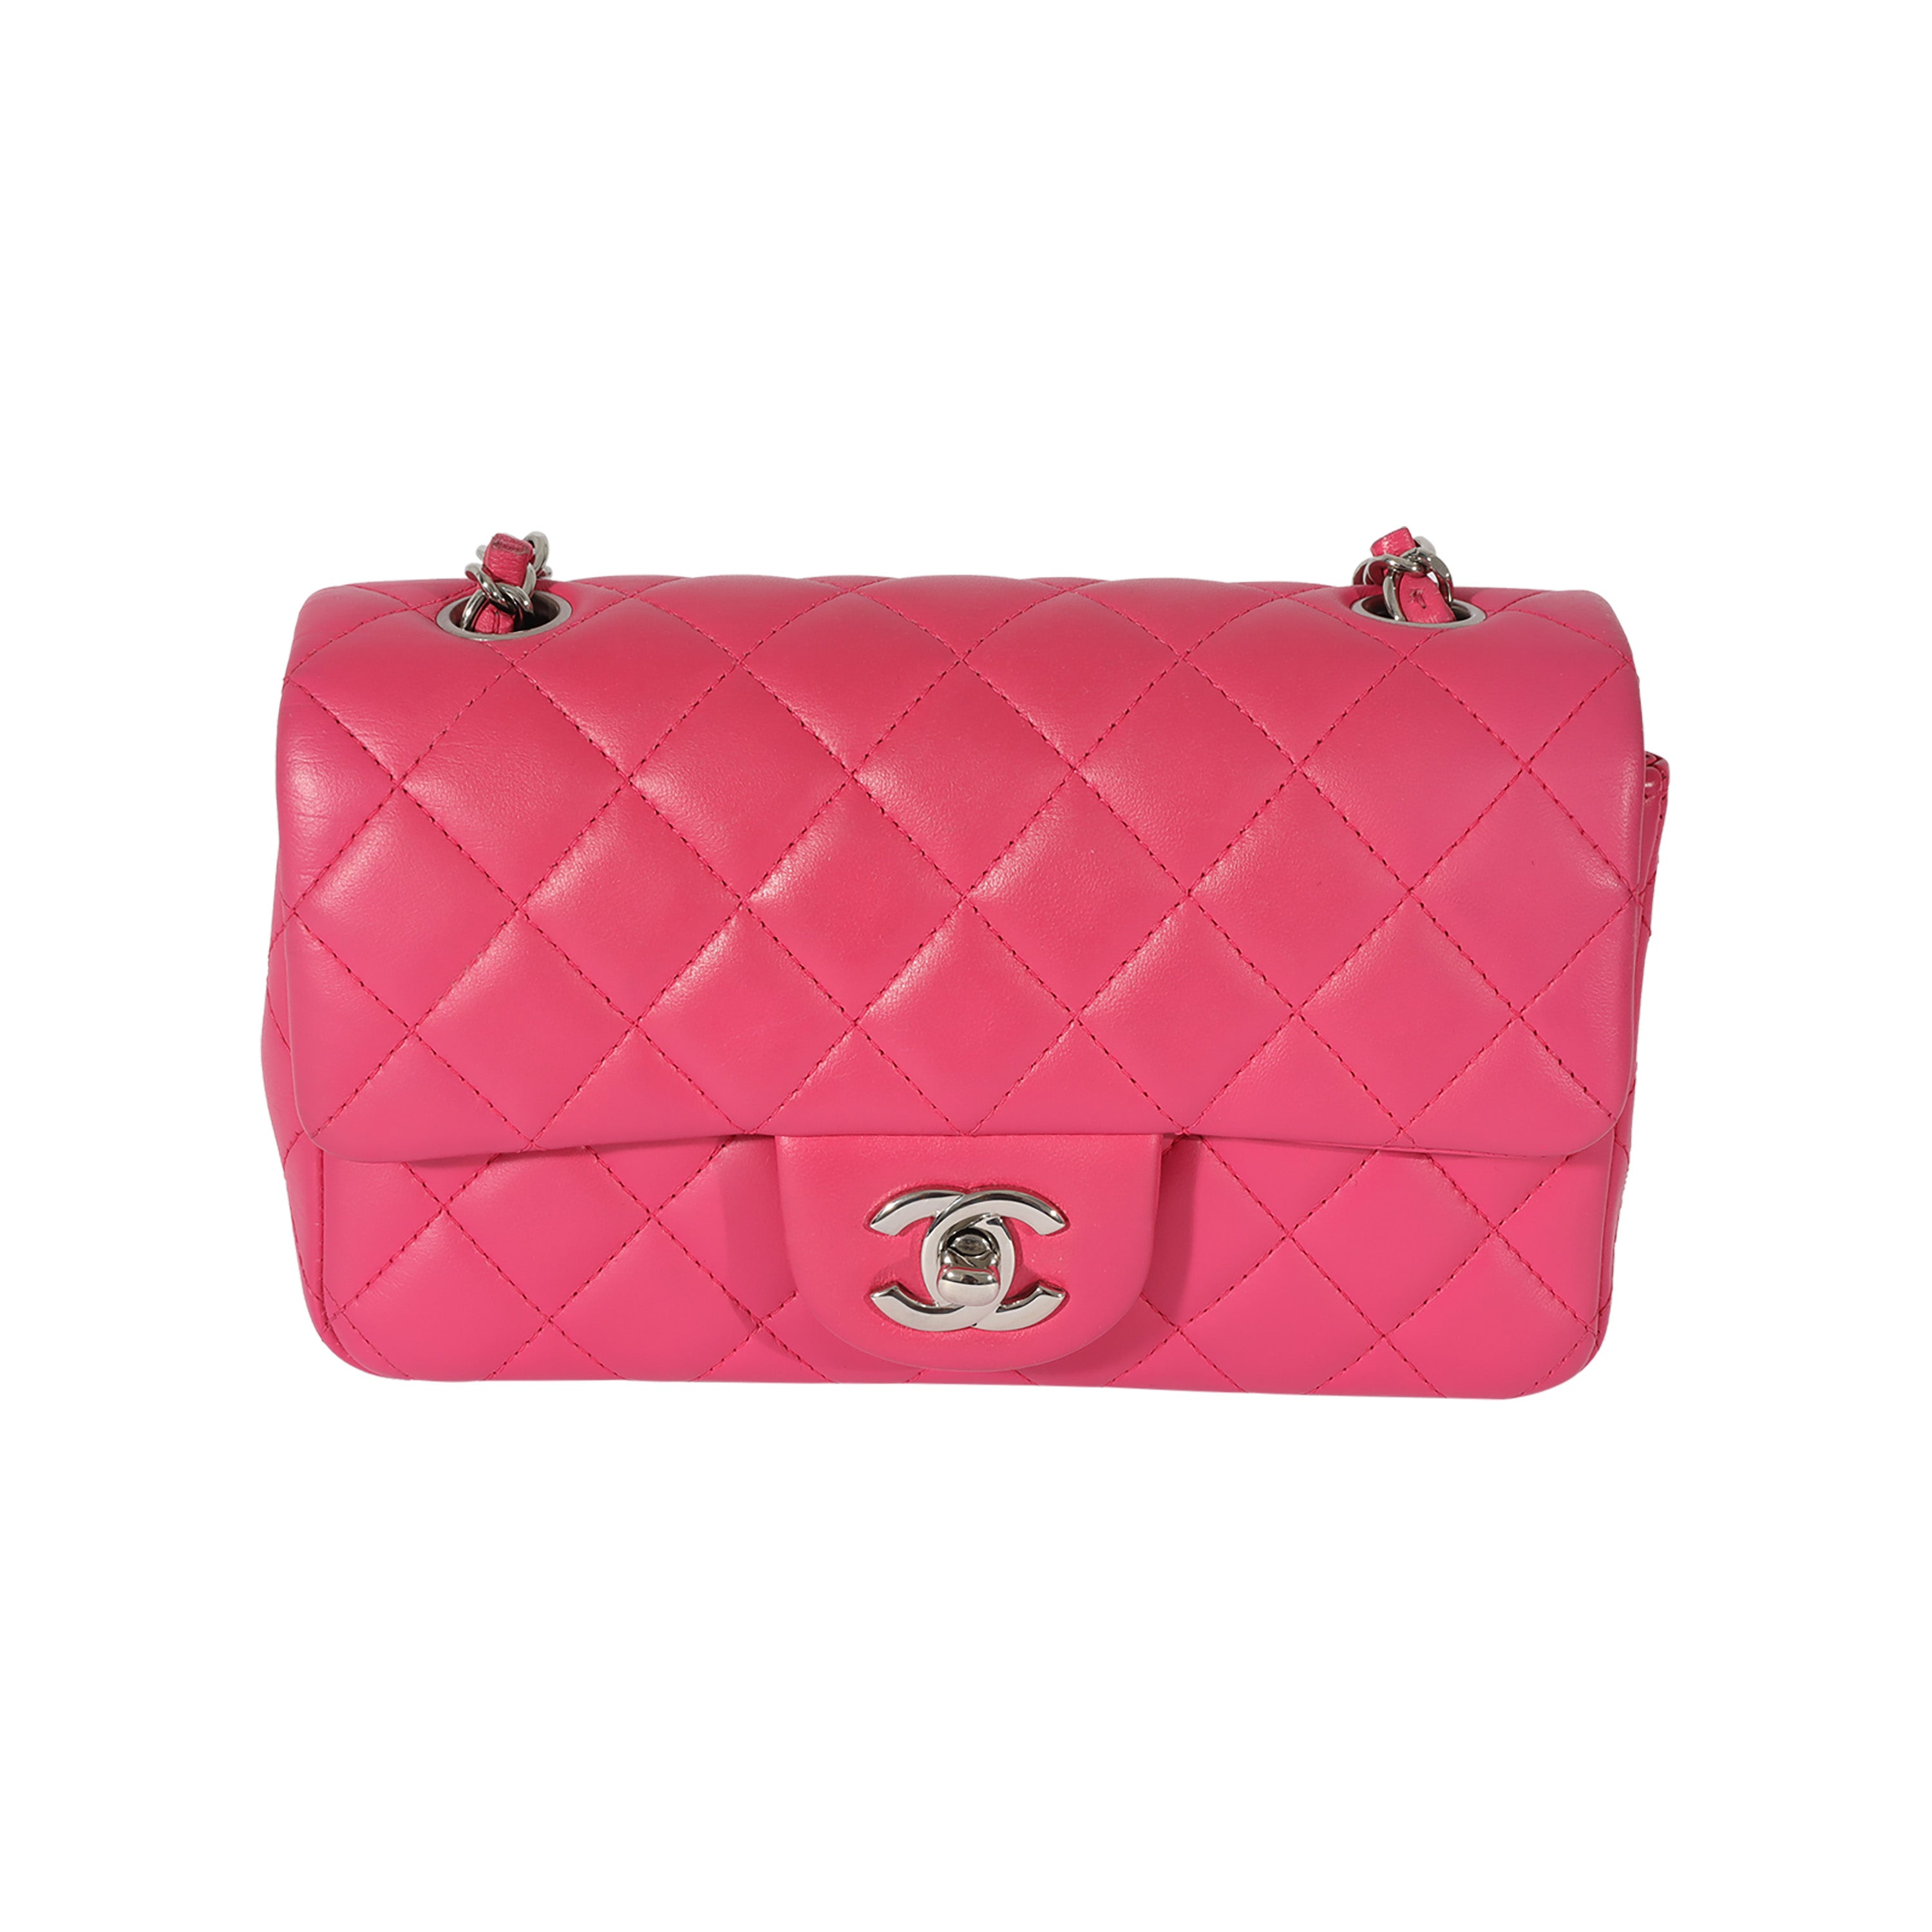 Chanel Pink Handbag 